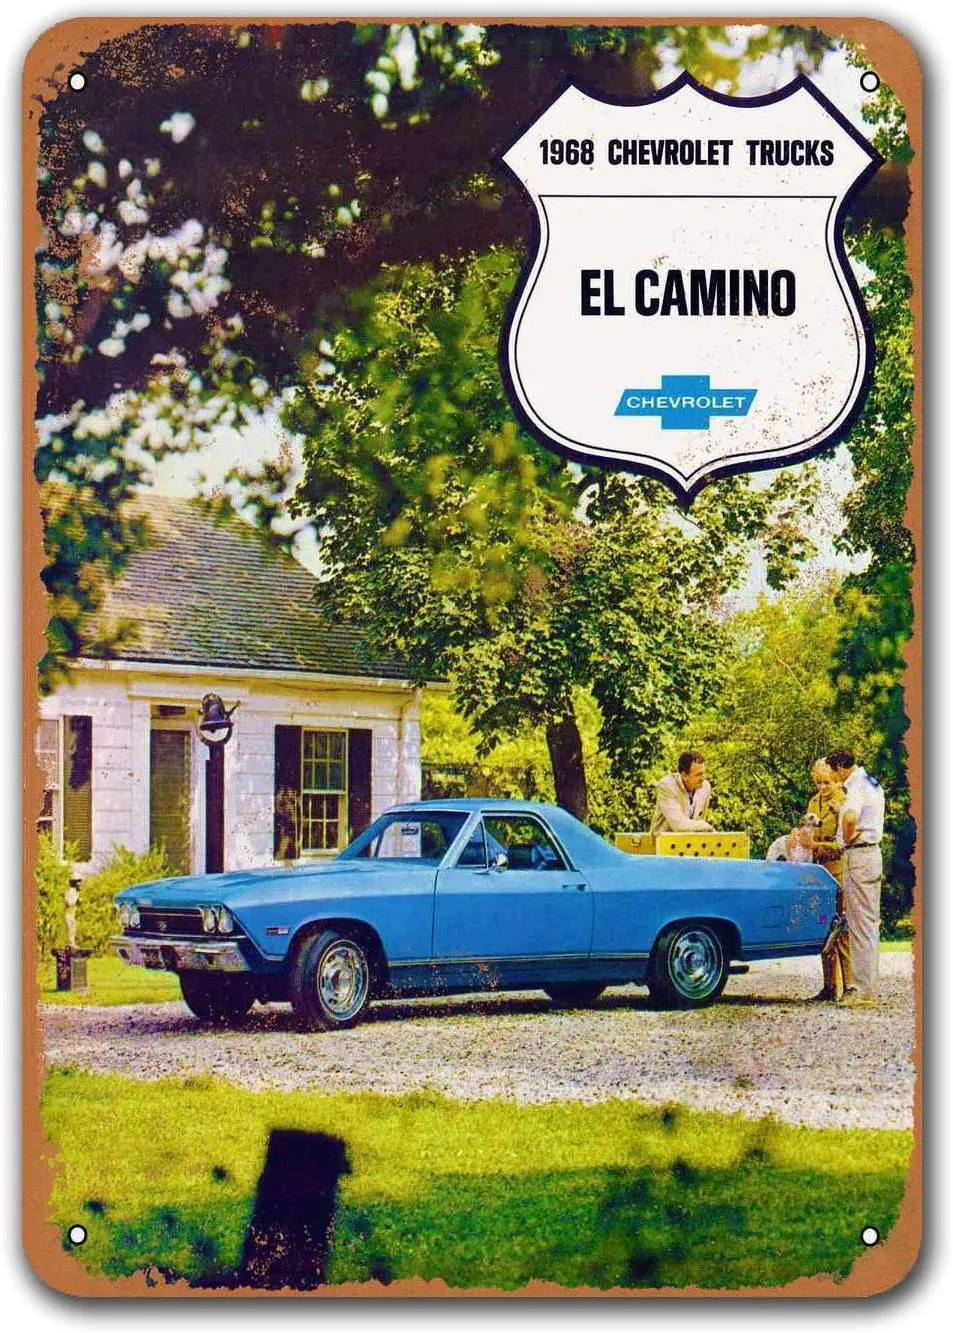 

1968 El Camino Old Car Tin Sign Vintage Metal Bar Poster Man Cave Pub Wall Decor Office Coffee Club Home Dorm 12x16 inches